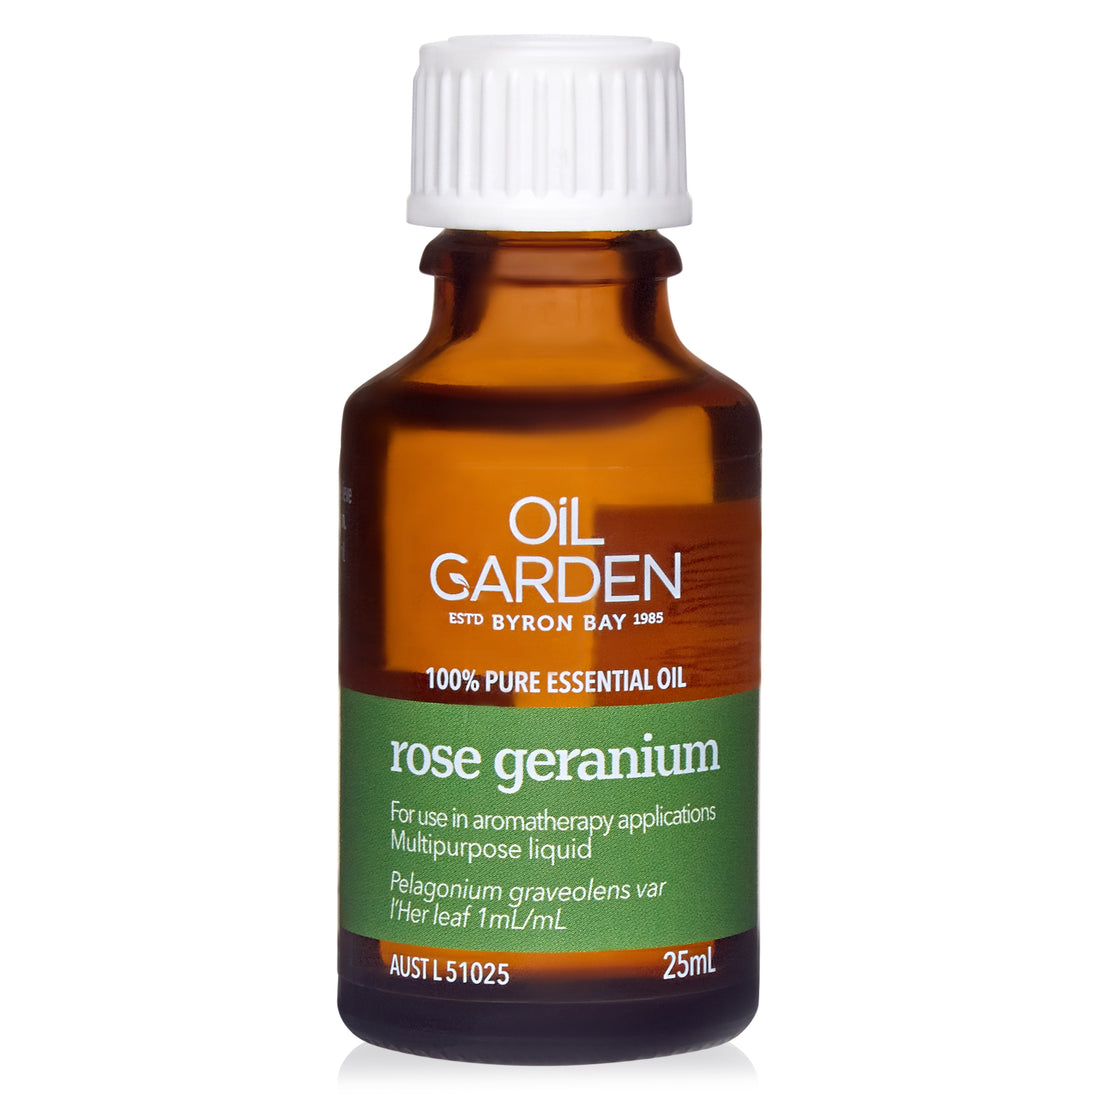 Oil Garden Rose Geranium Oil 25ml